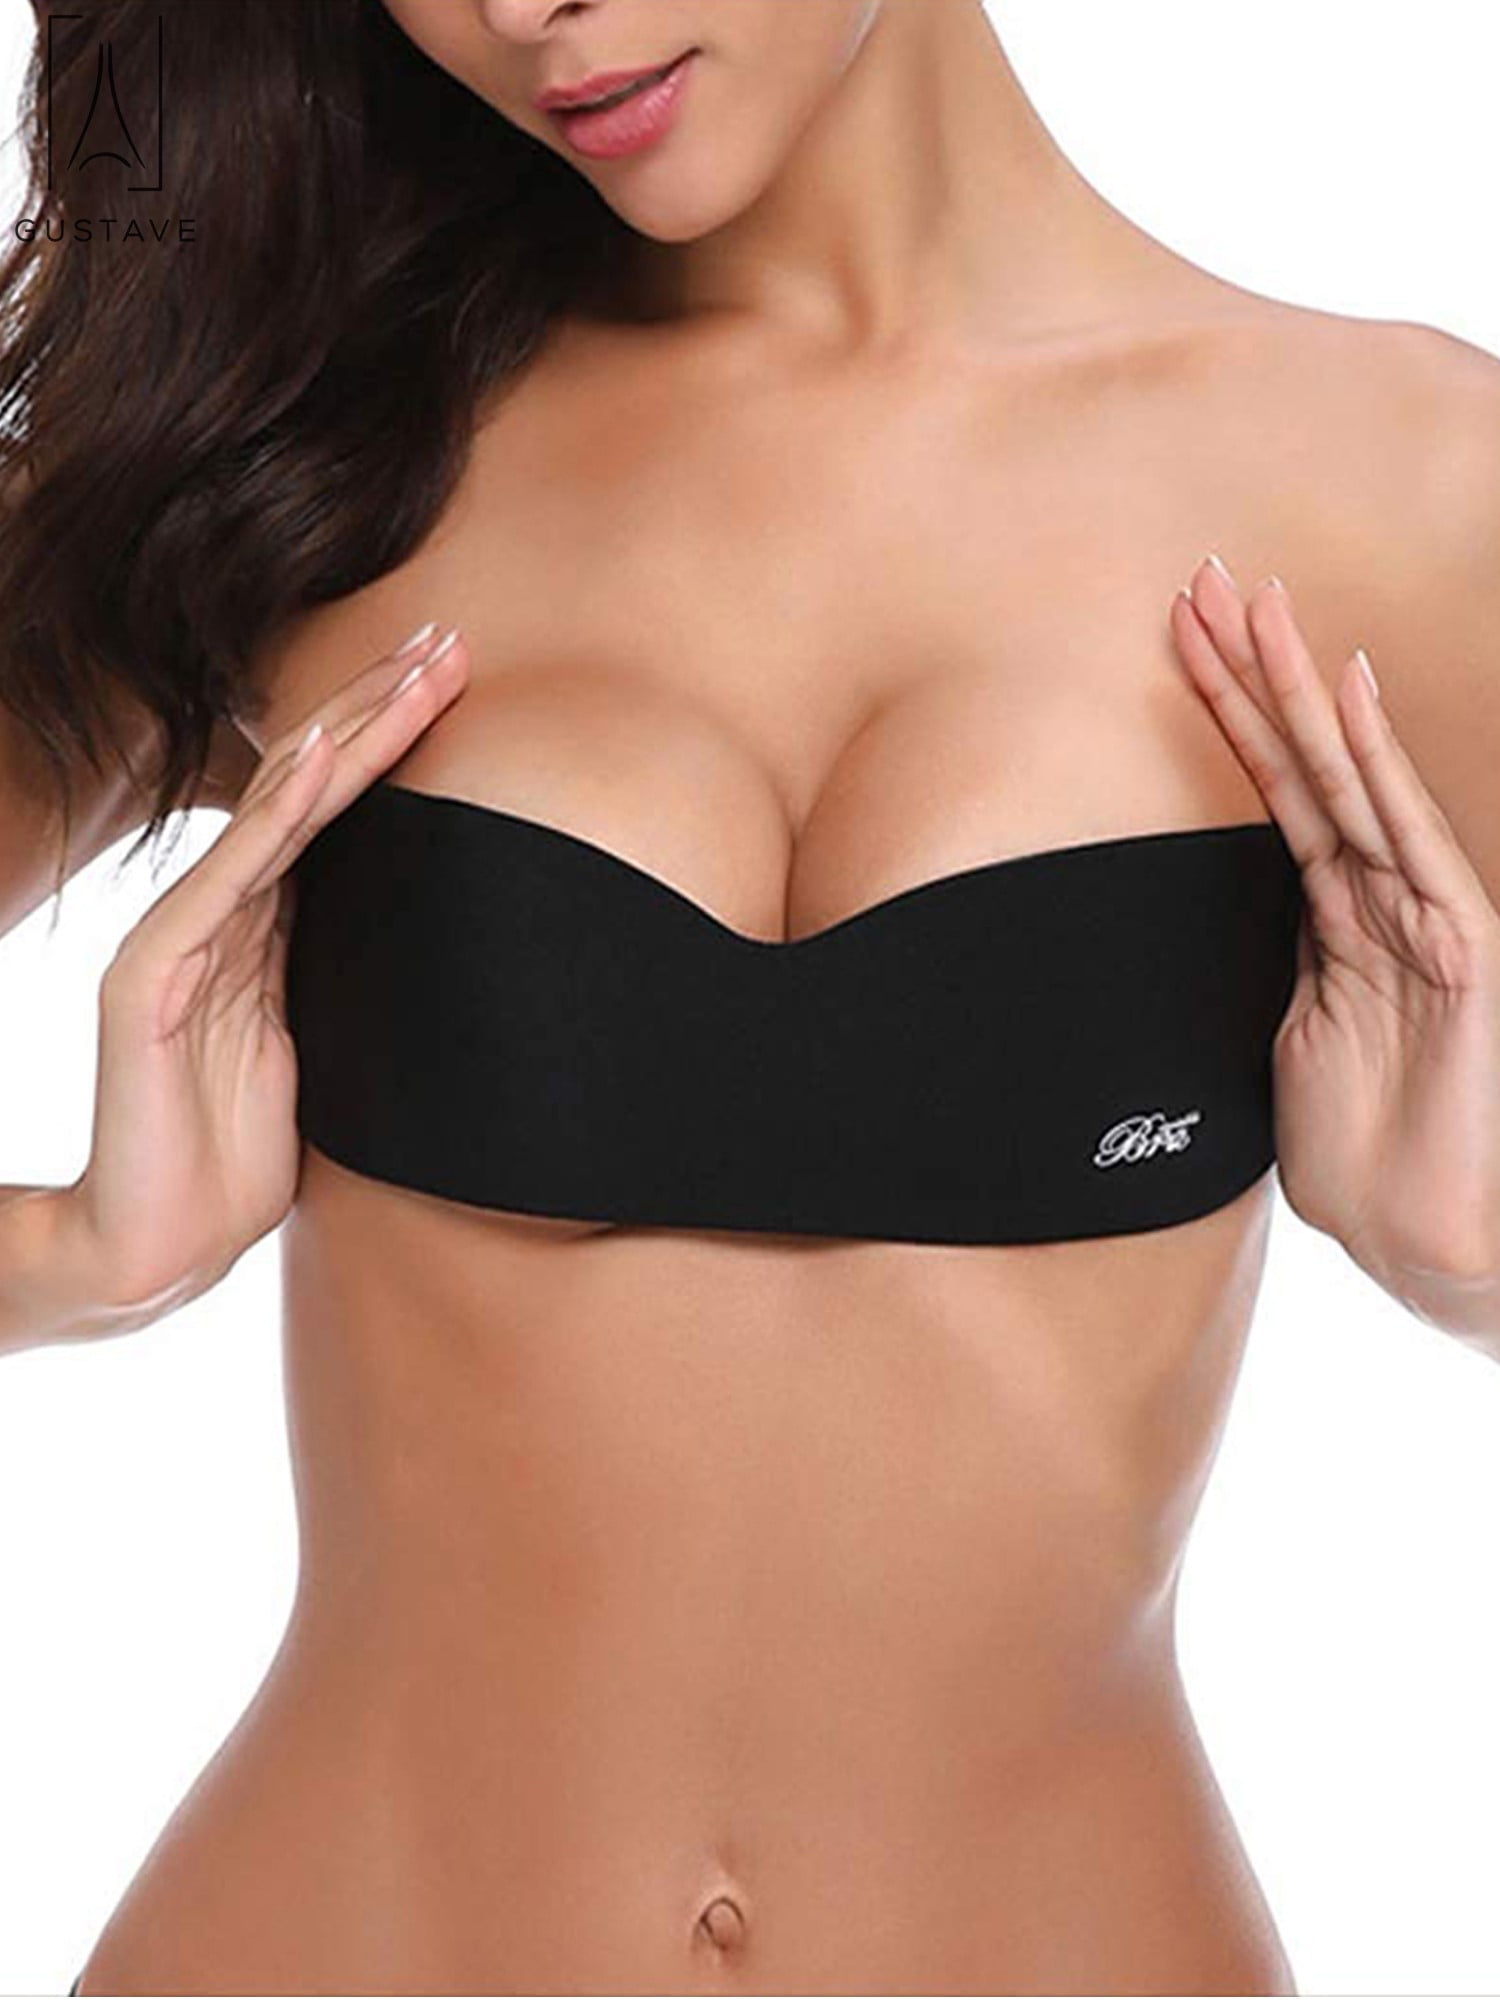 Women's Boob Tape Breast Lift Seamless Bra Push Up Nude Black 2pc Set  5cm*5m